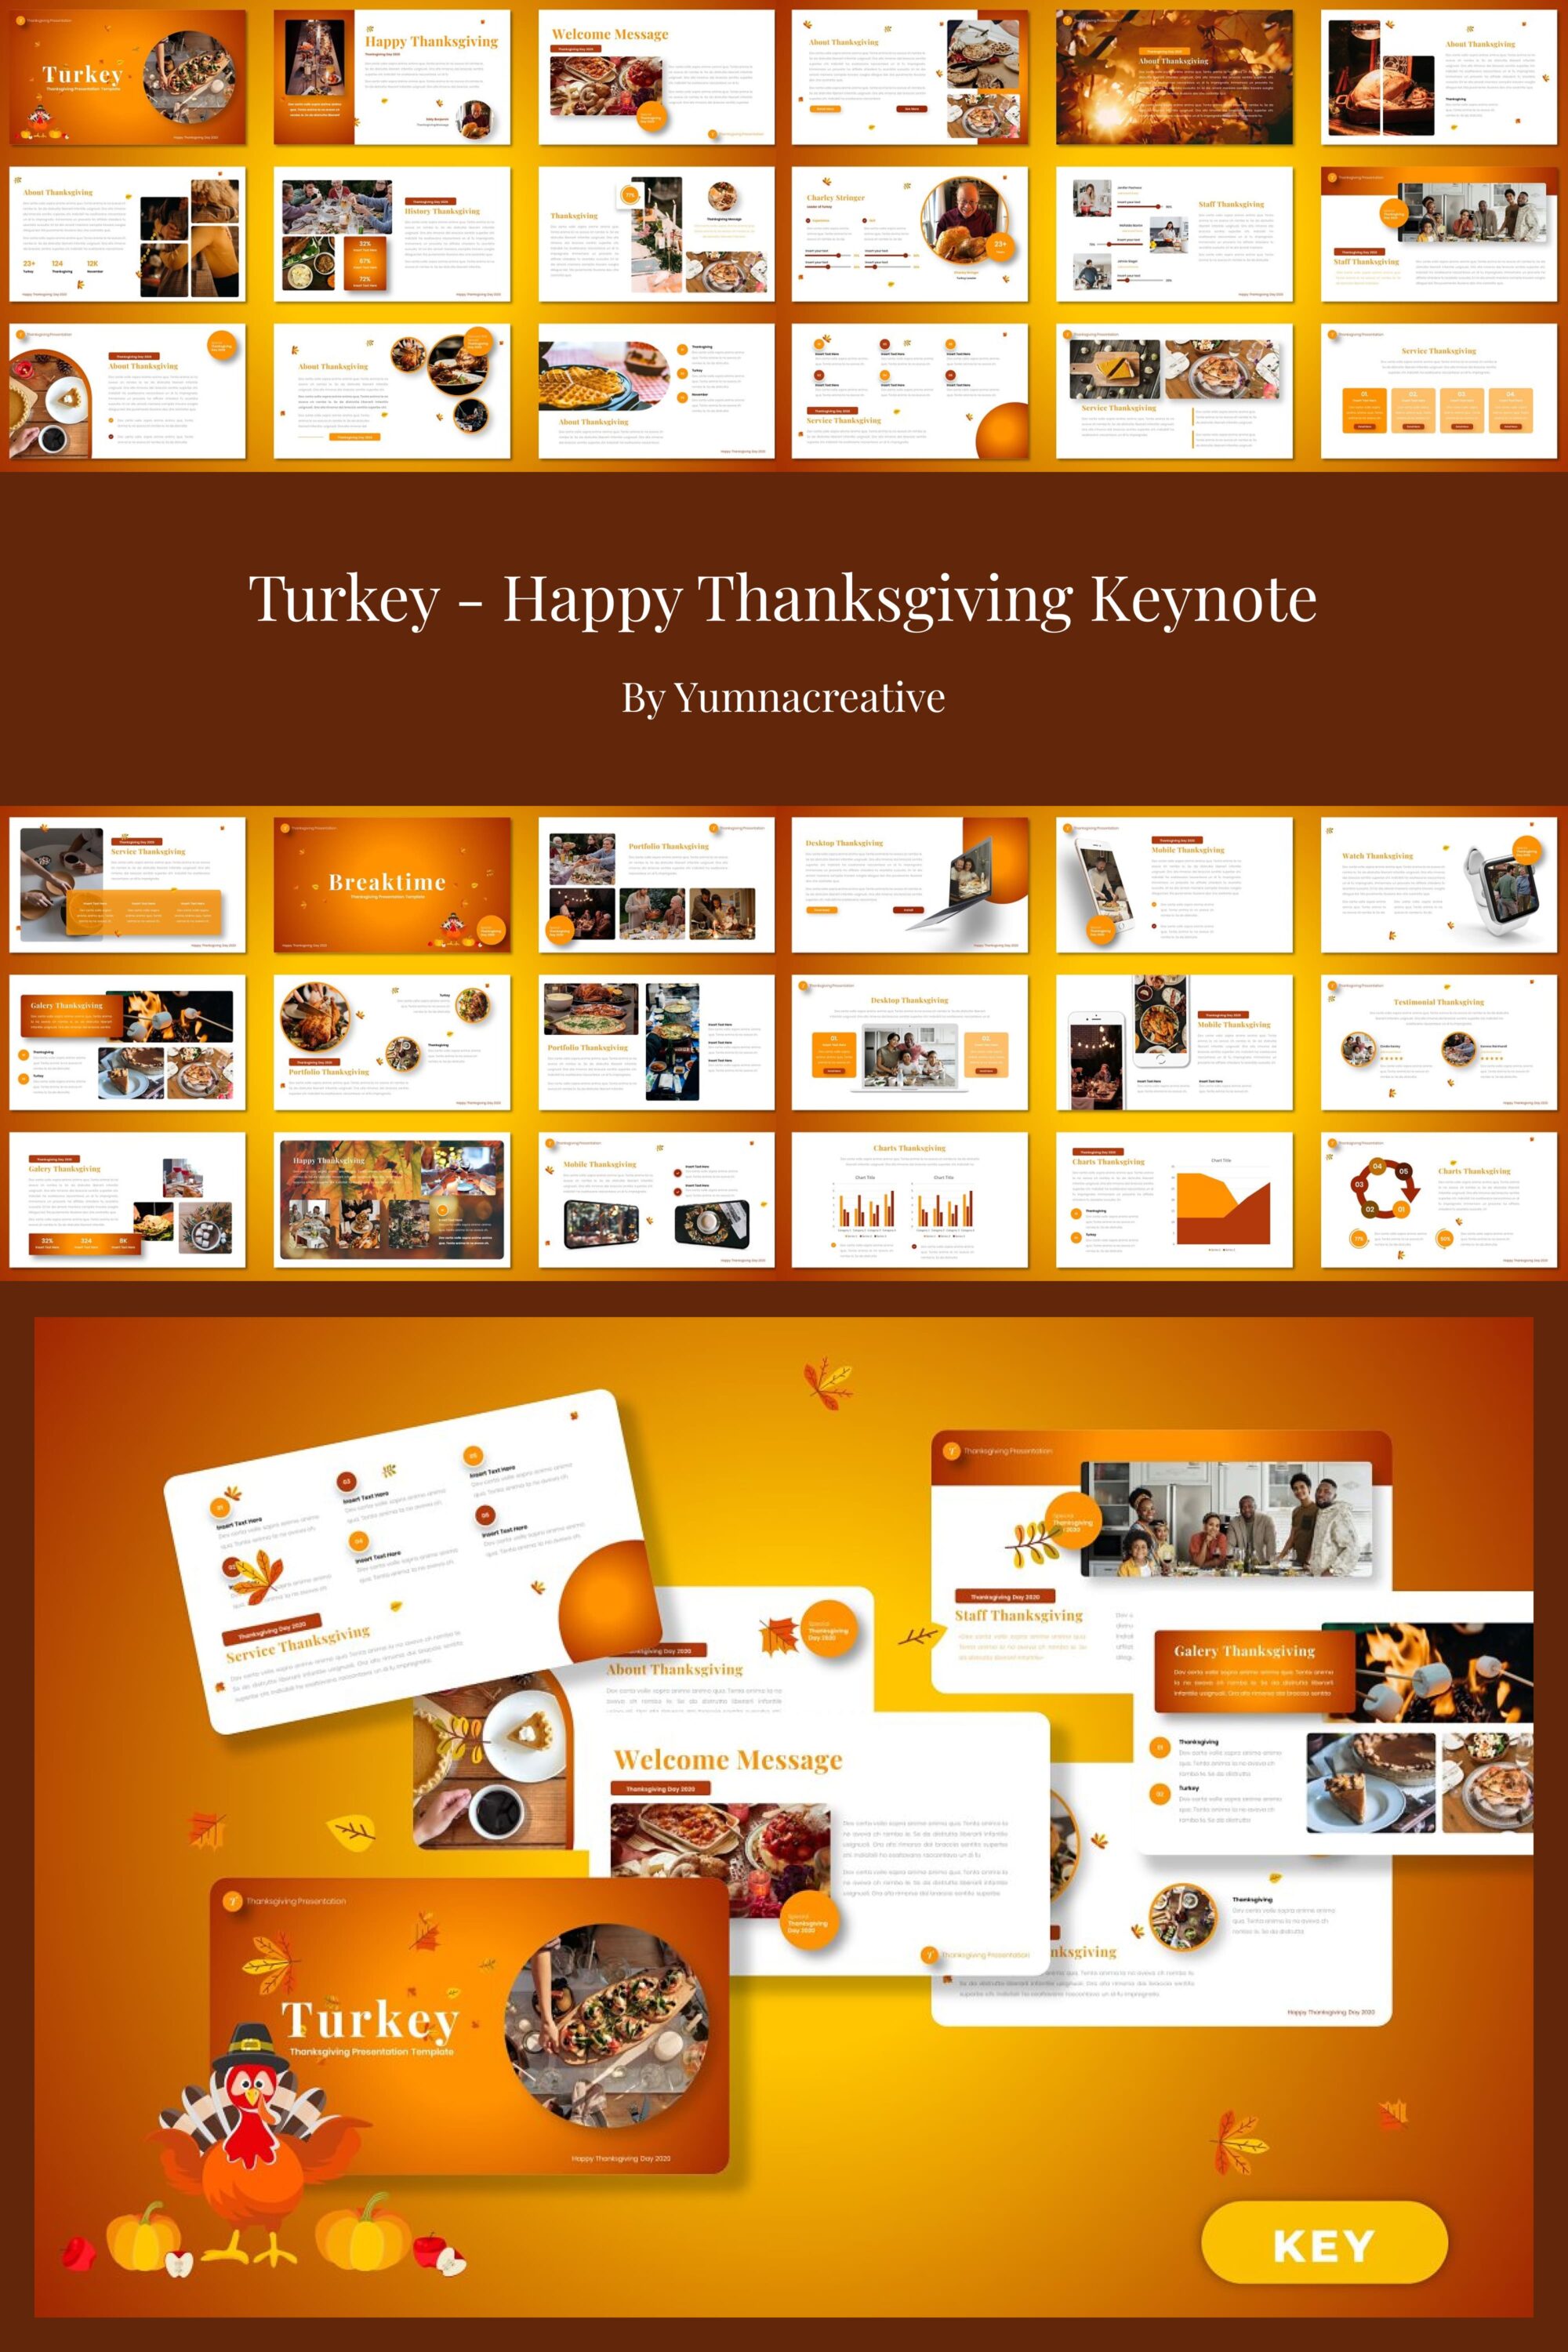 Turkey Happy Thanksgiving Keynote - pinterest image preview.